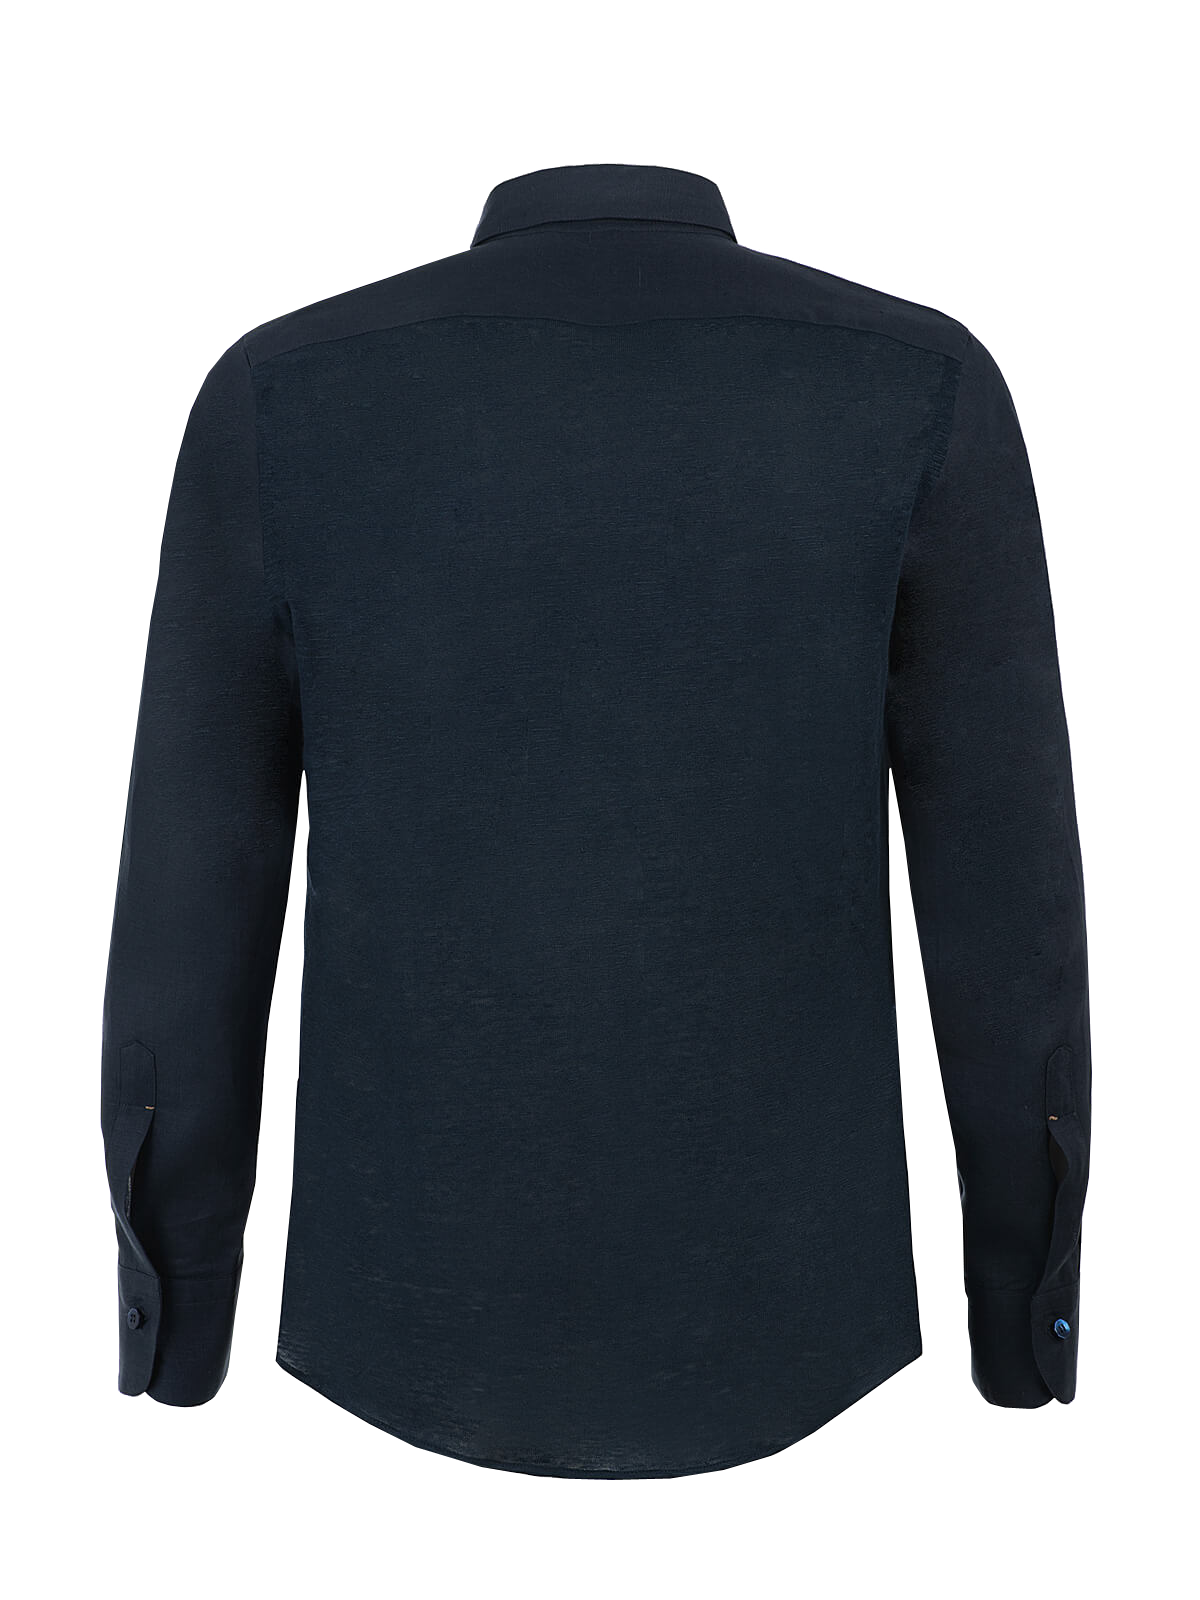 Camicia Mykonos 100% Capri blue linen shirt back